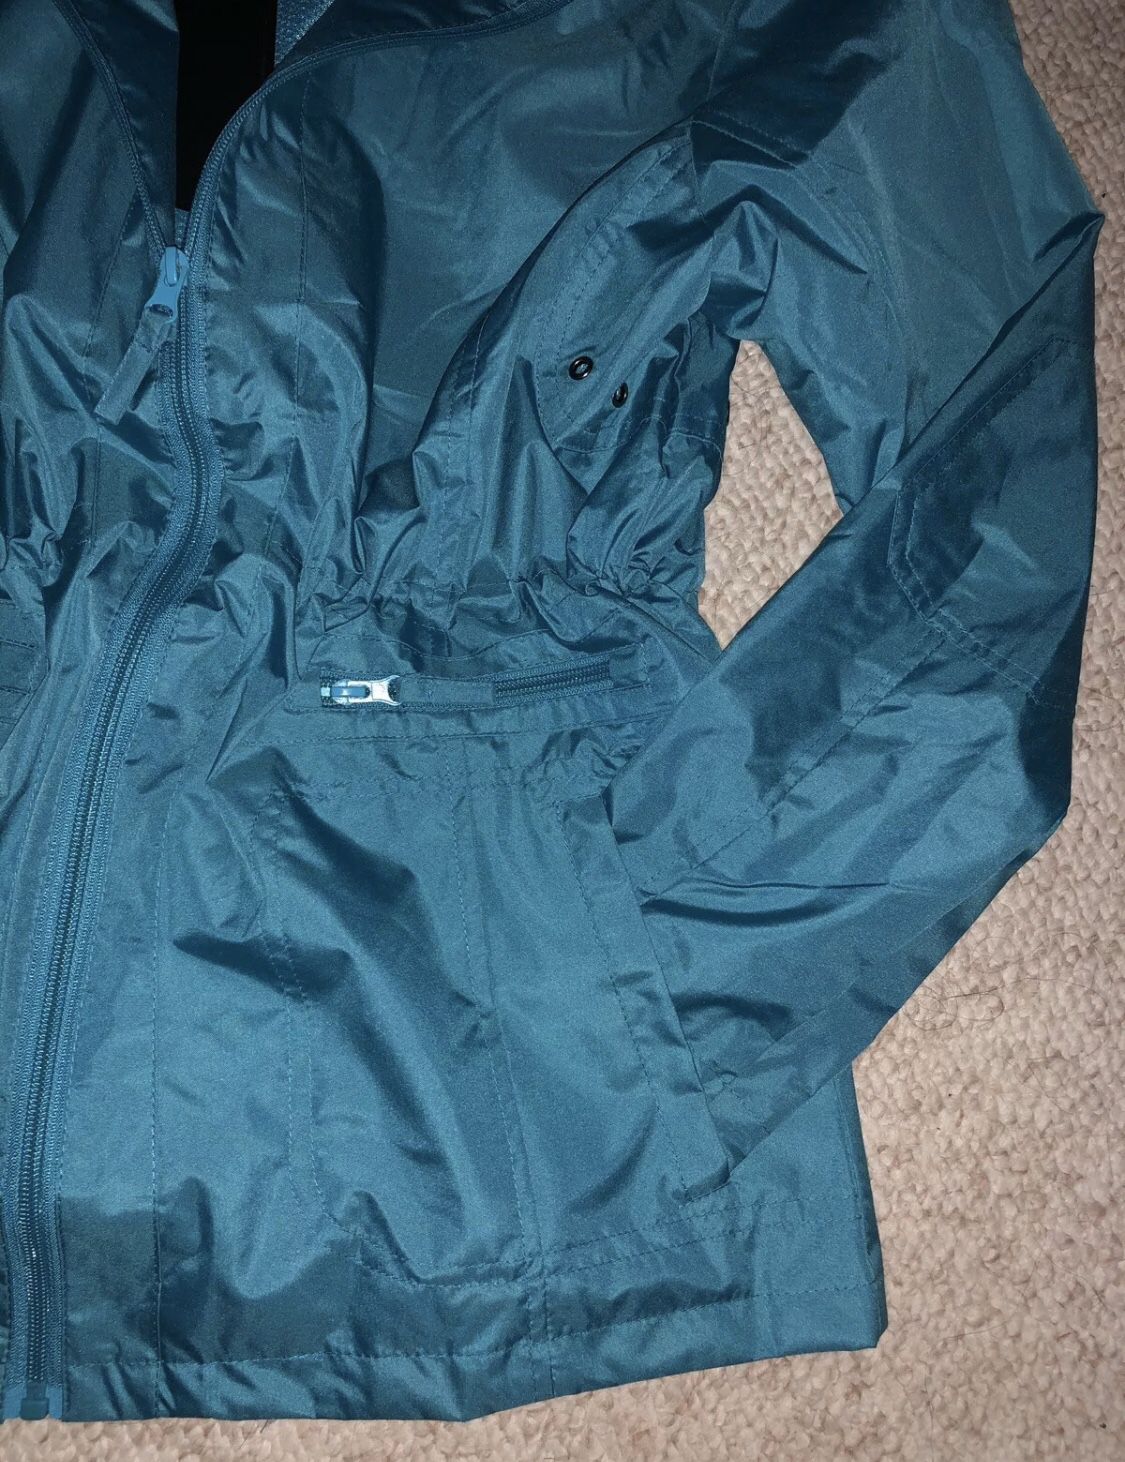 NEW Turquoise rain jacket Coat S windbreaker cozy